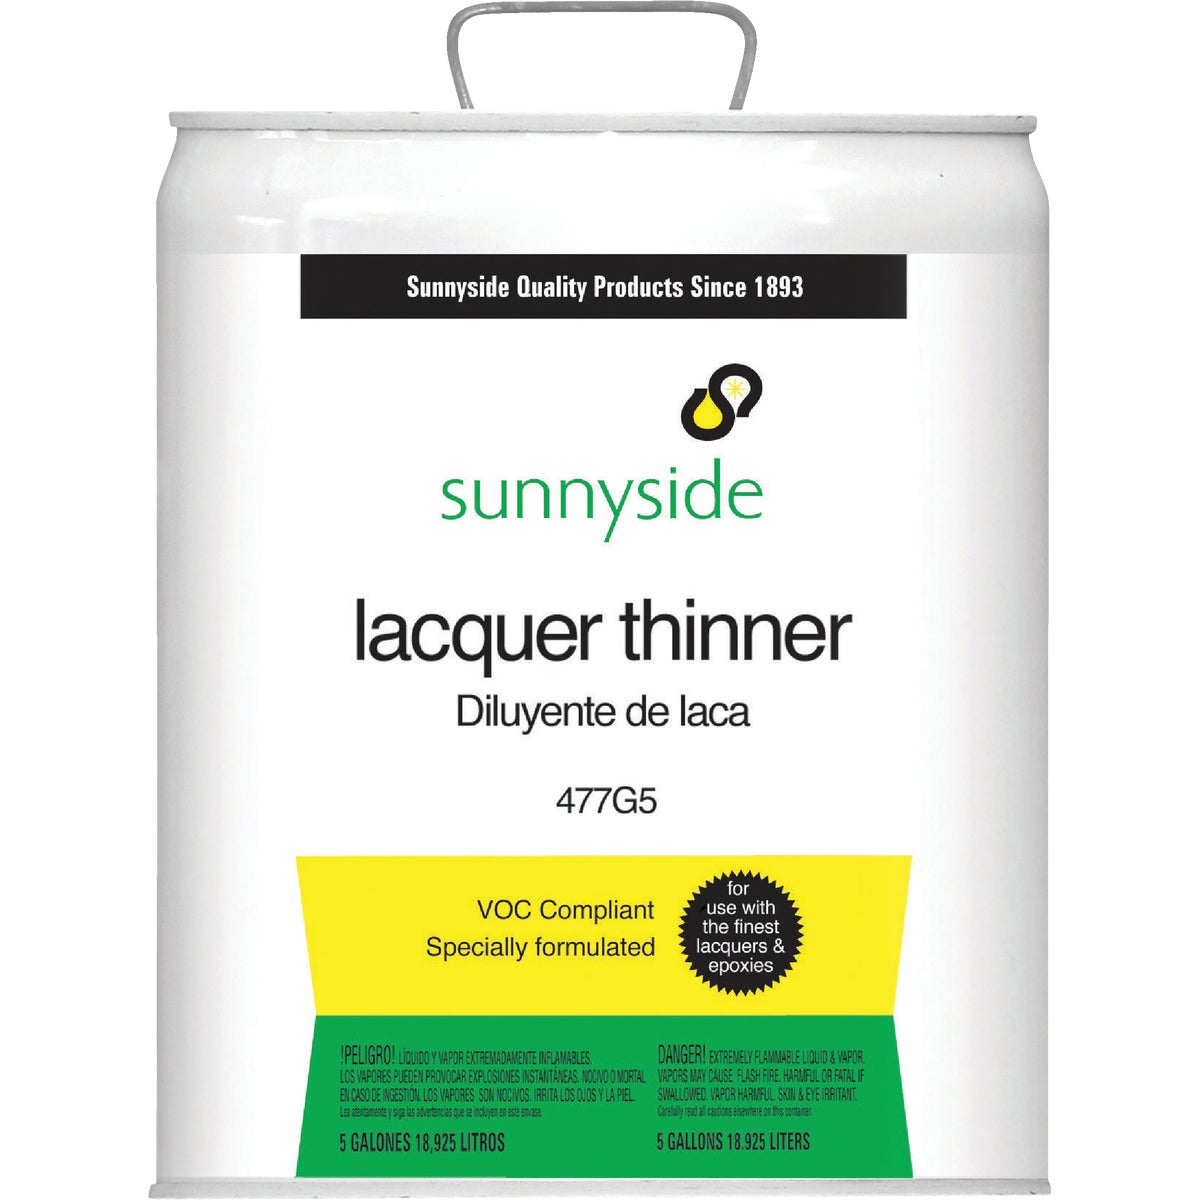 Sunnyside Low VOC Lacquer Thinner, 5 Gallon